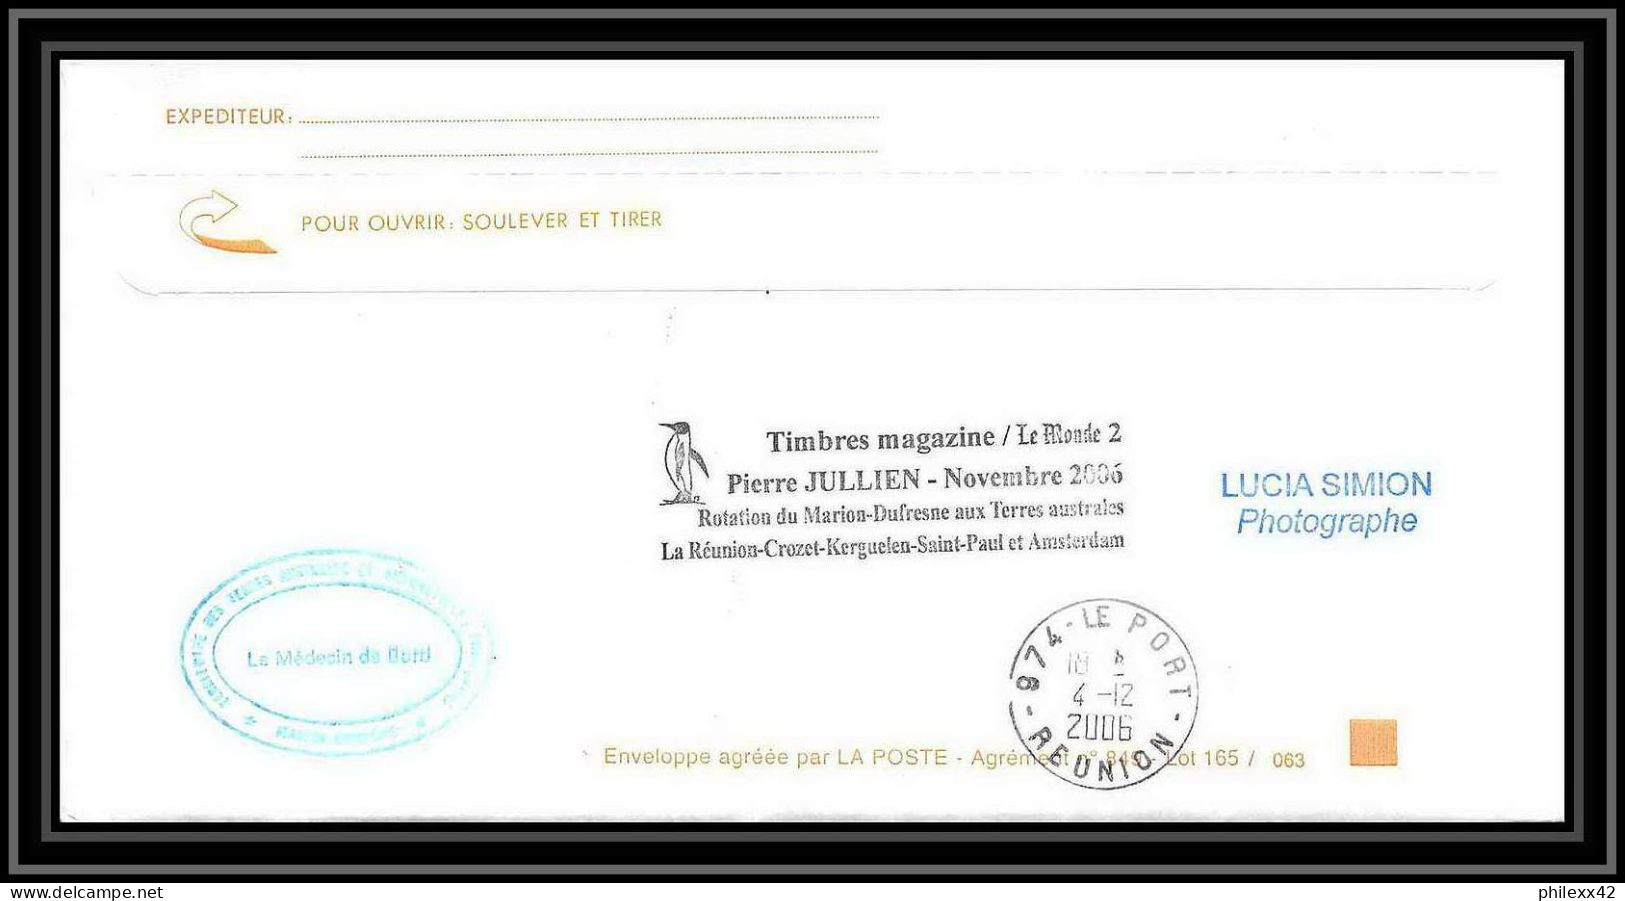 2618 ANTARCTIC Terres Australes TAAF Lettre Cover Dufresne 2 Signé Signed Op 2006/3 N°442 23/11/2006 St Paul - Expéditions Antarctiques